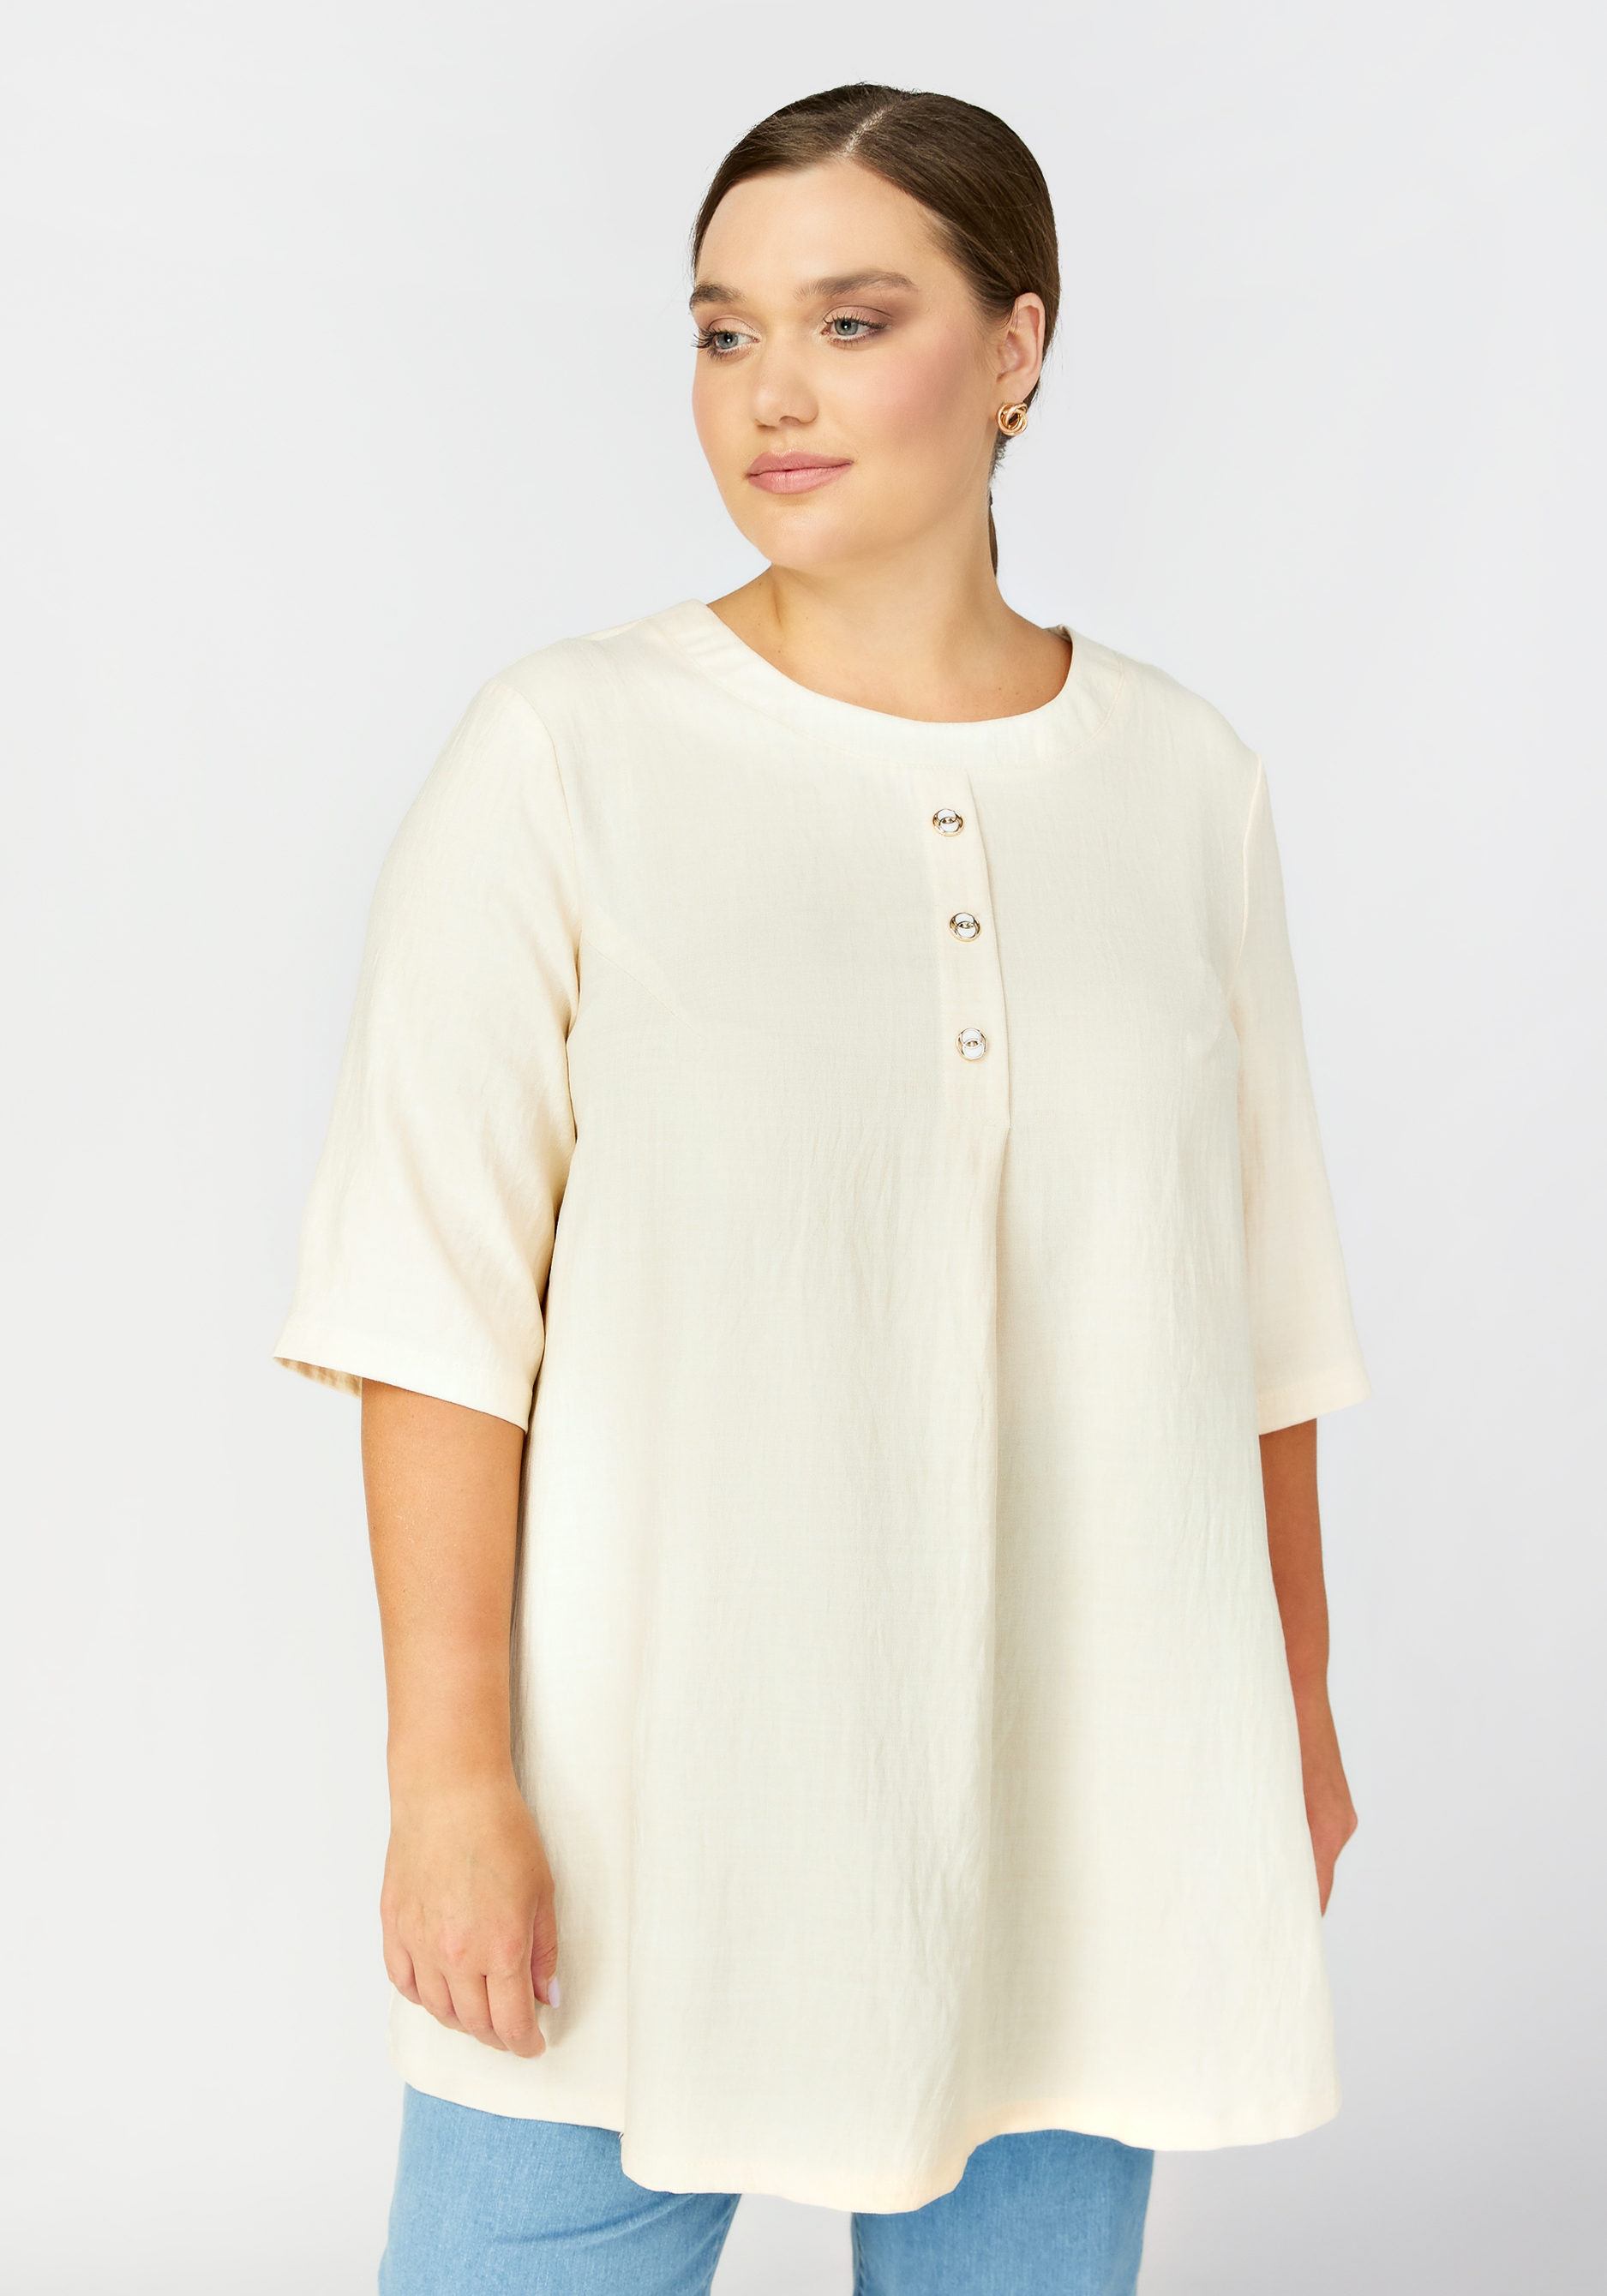 Блуза с планкой на пуговицах жен туника муслин белый р 50